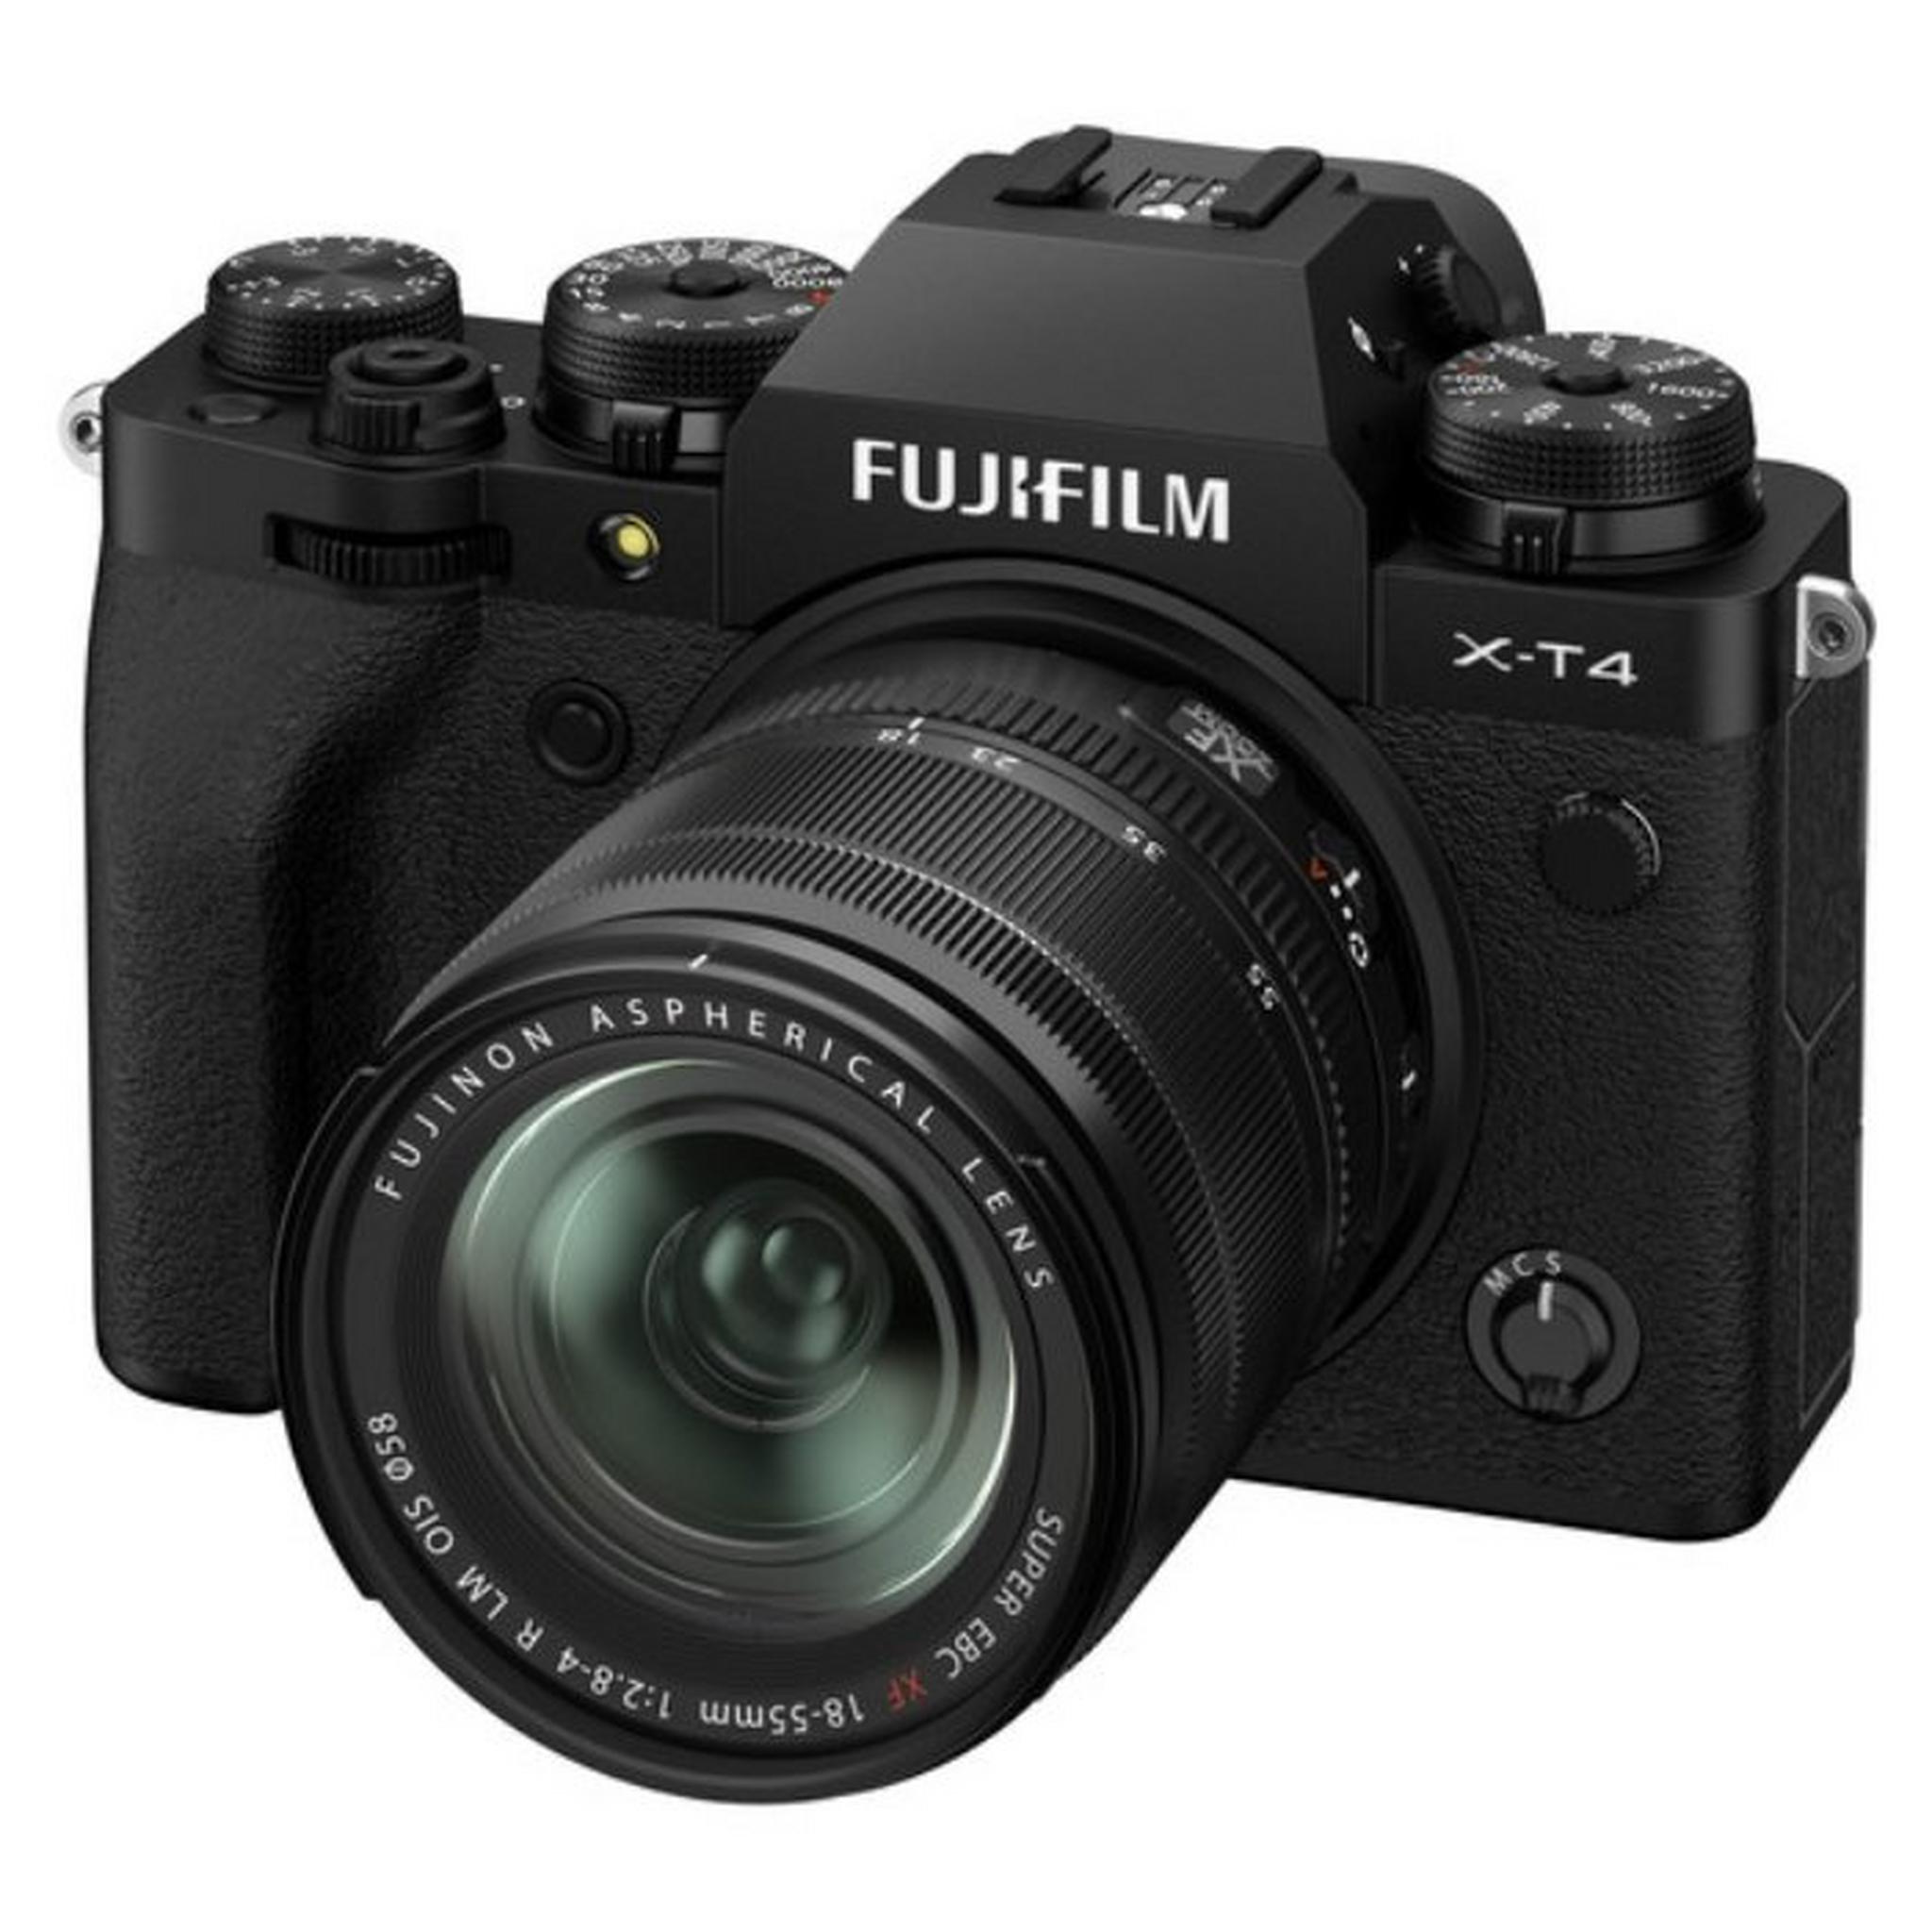 Fujifilm X-T4 Mirrorless Digital Camera with 18-55mm Lens - Black